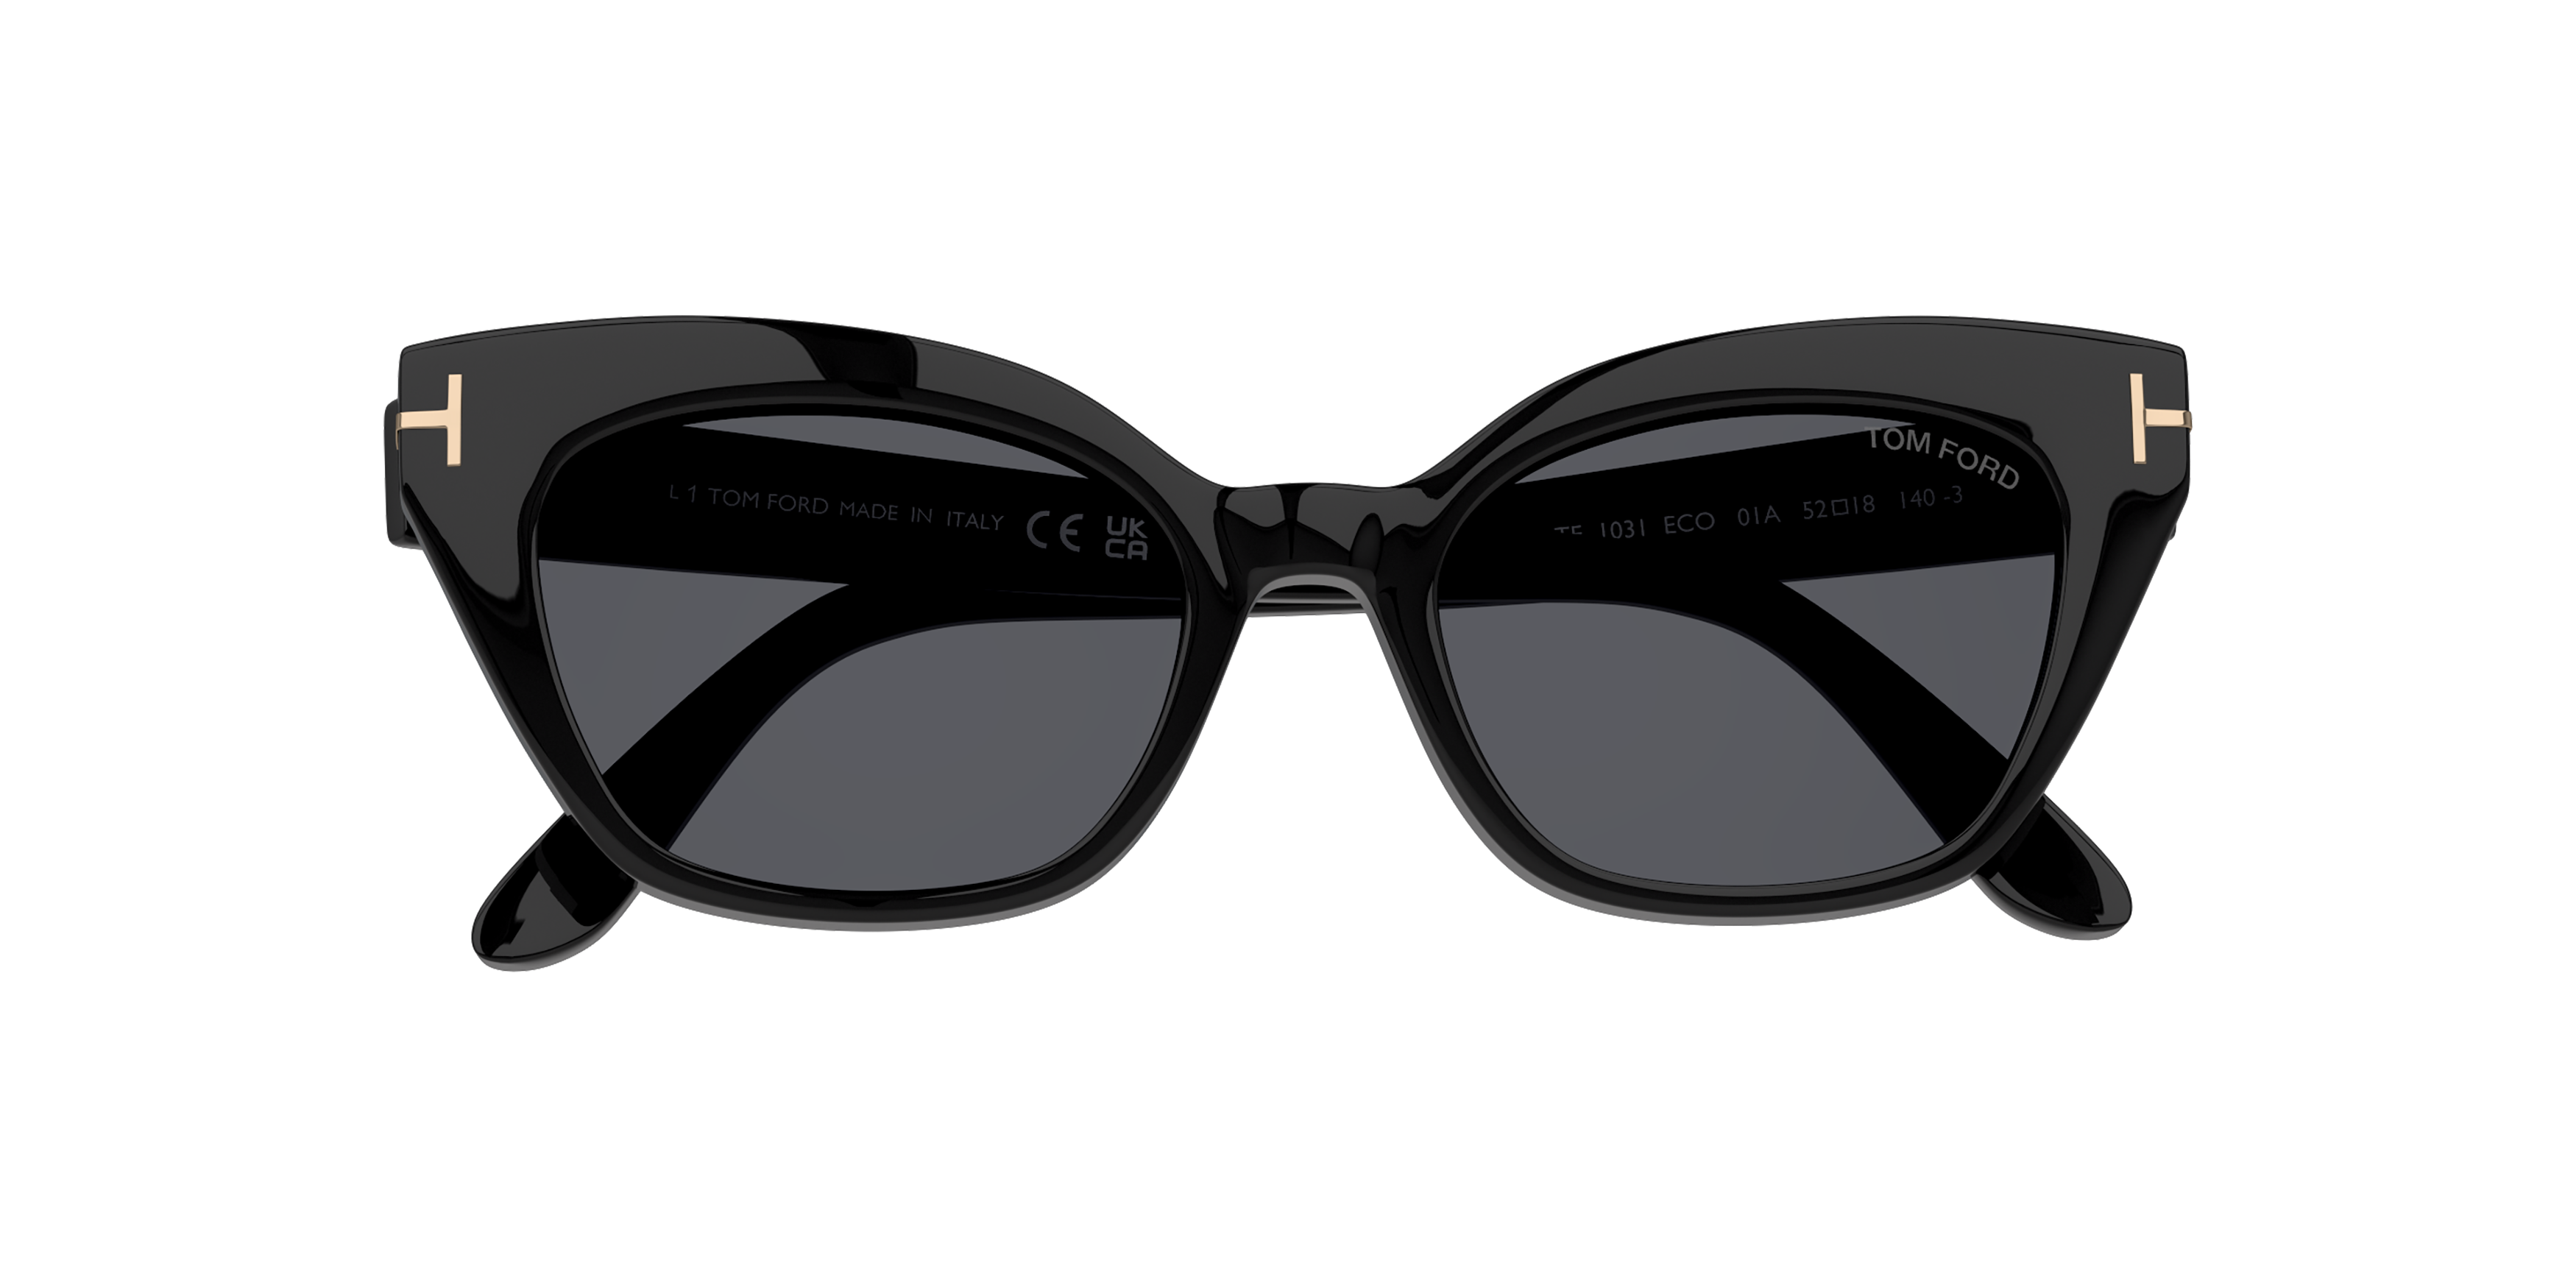 Folded Tom Ford FT 1031 (01A) Sunglasses Grey / Black